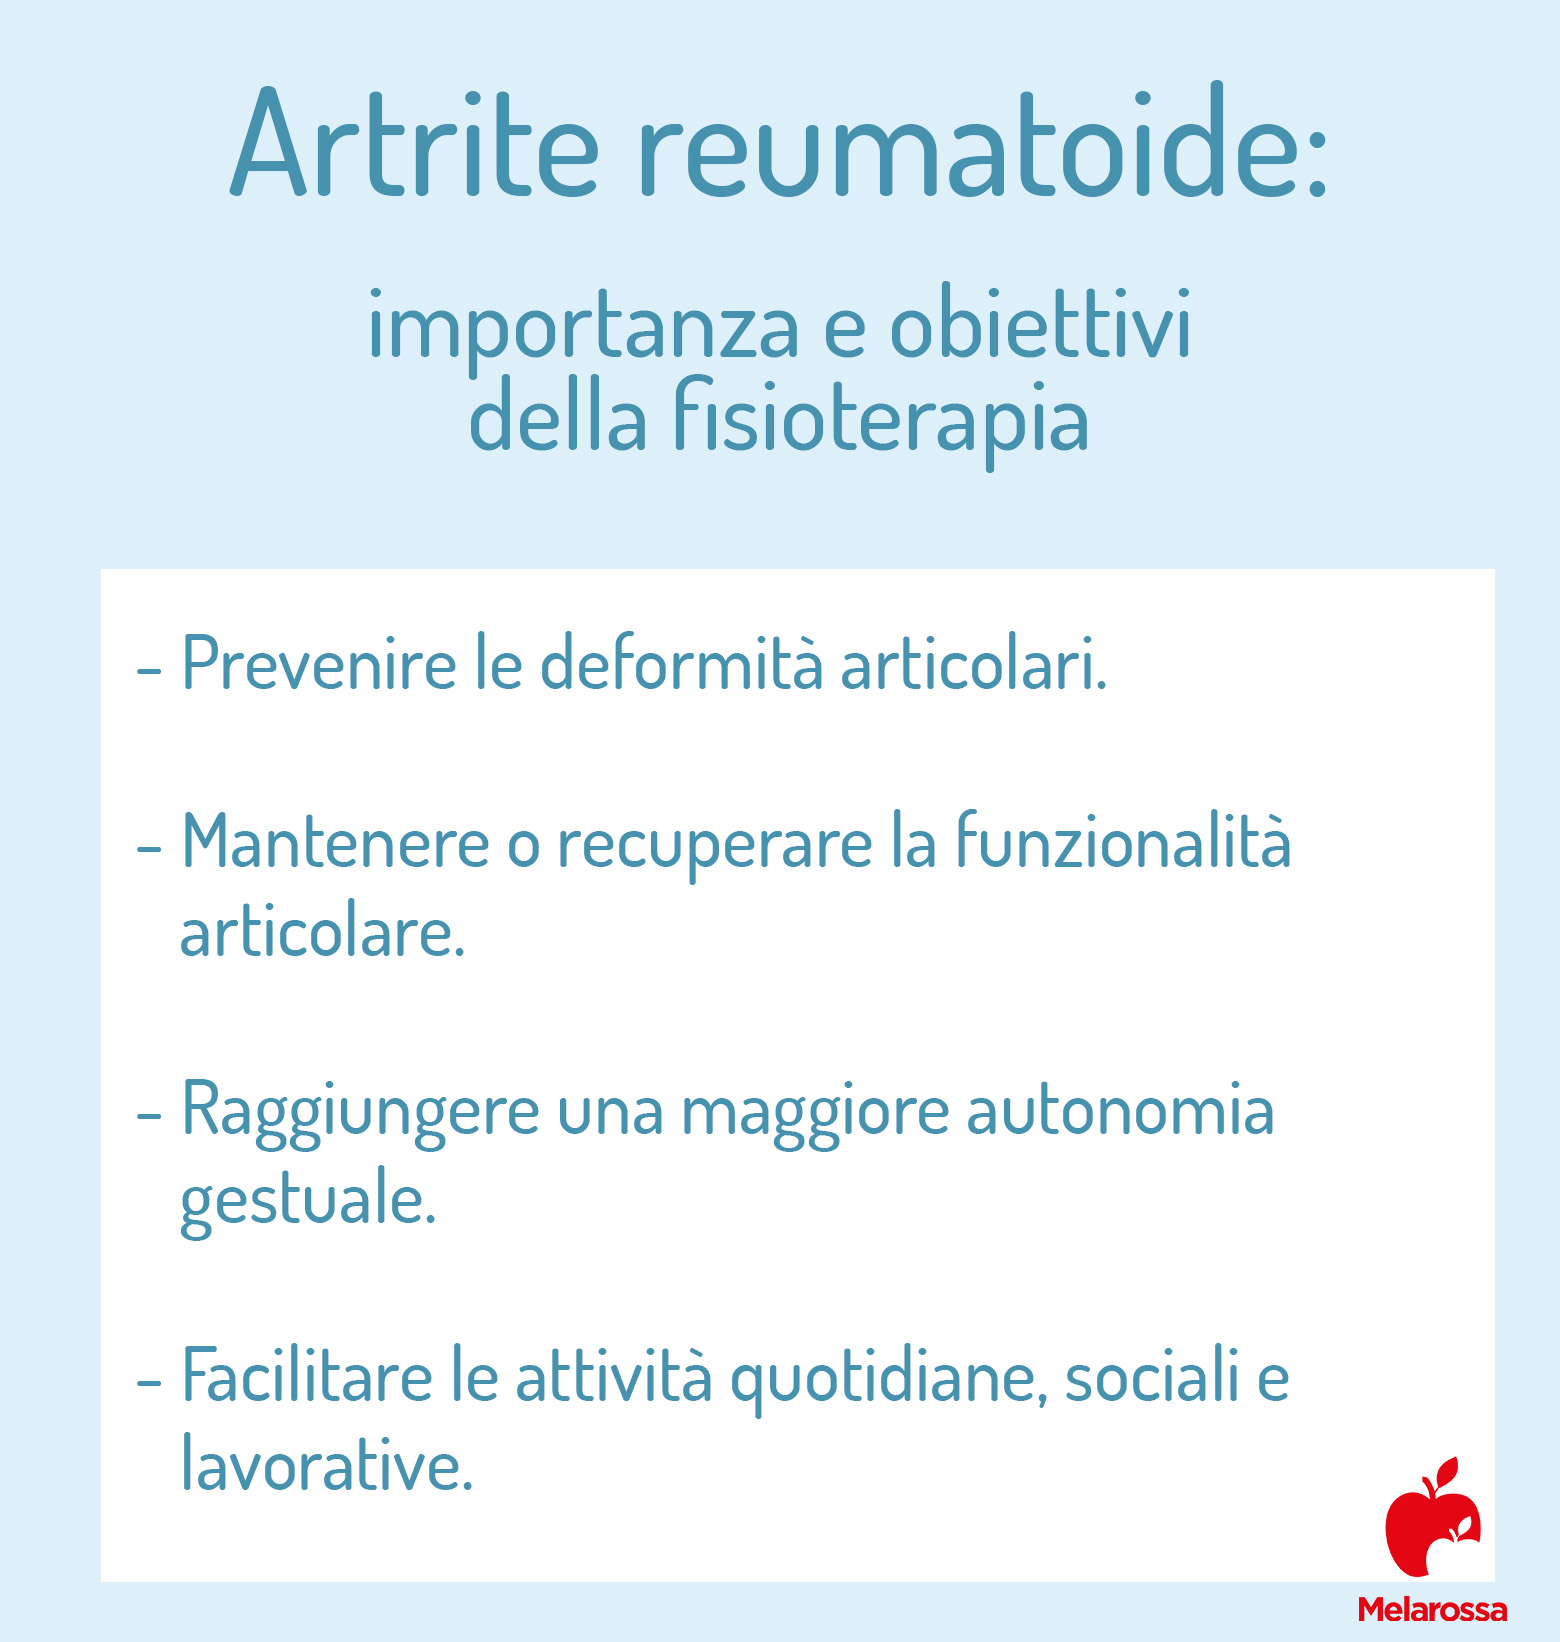 artrite reumatoide: fisoterapia